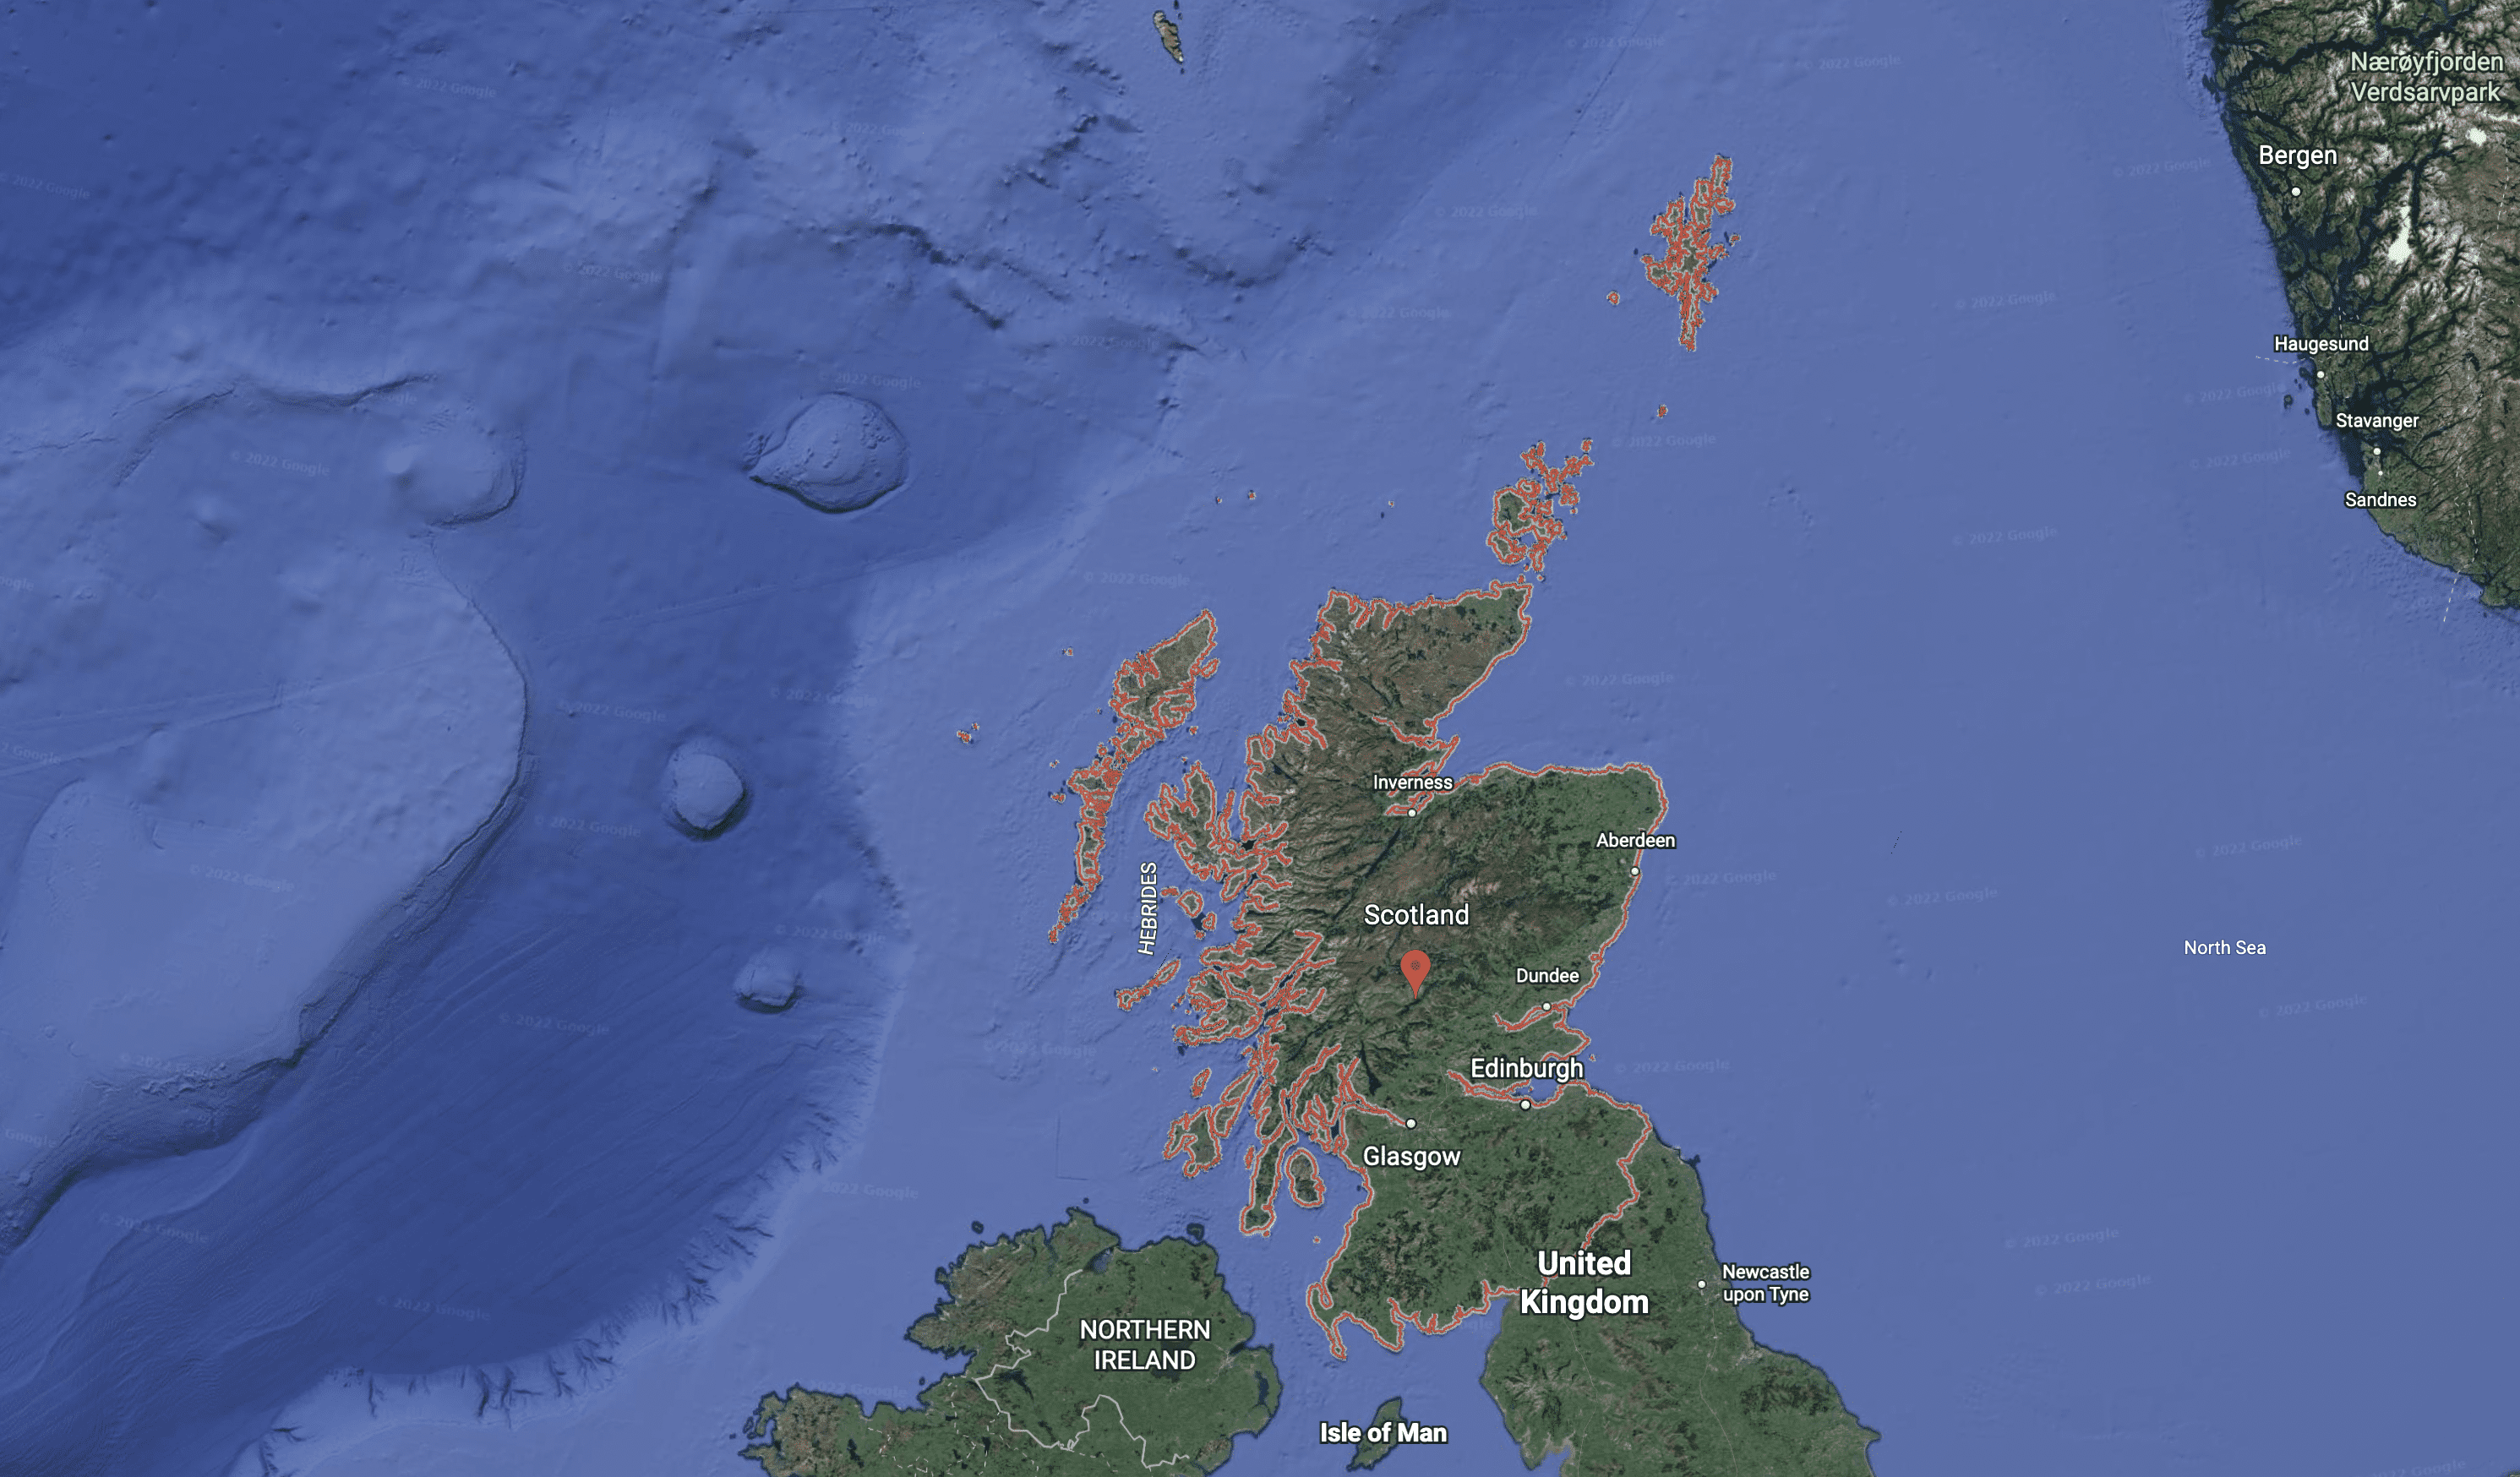 Google Earth Satellite Image of Scotland